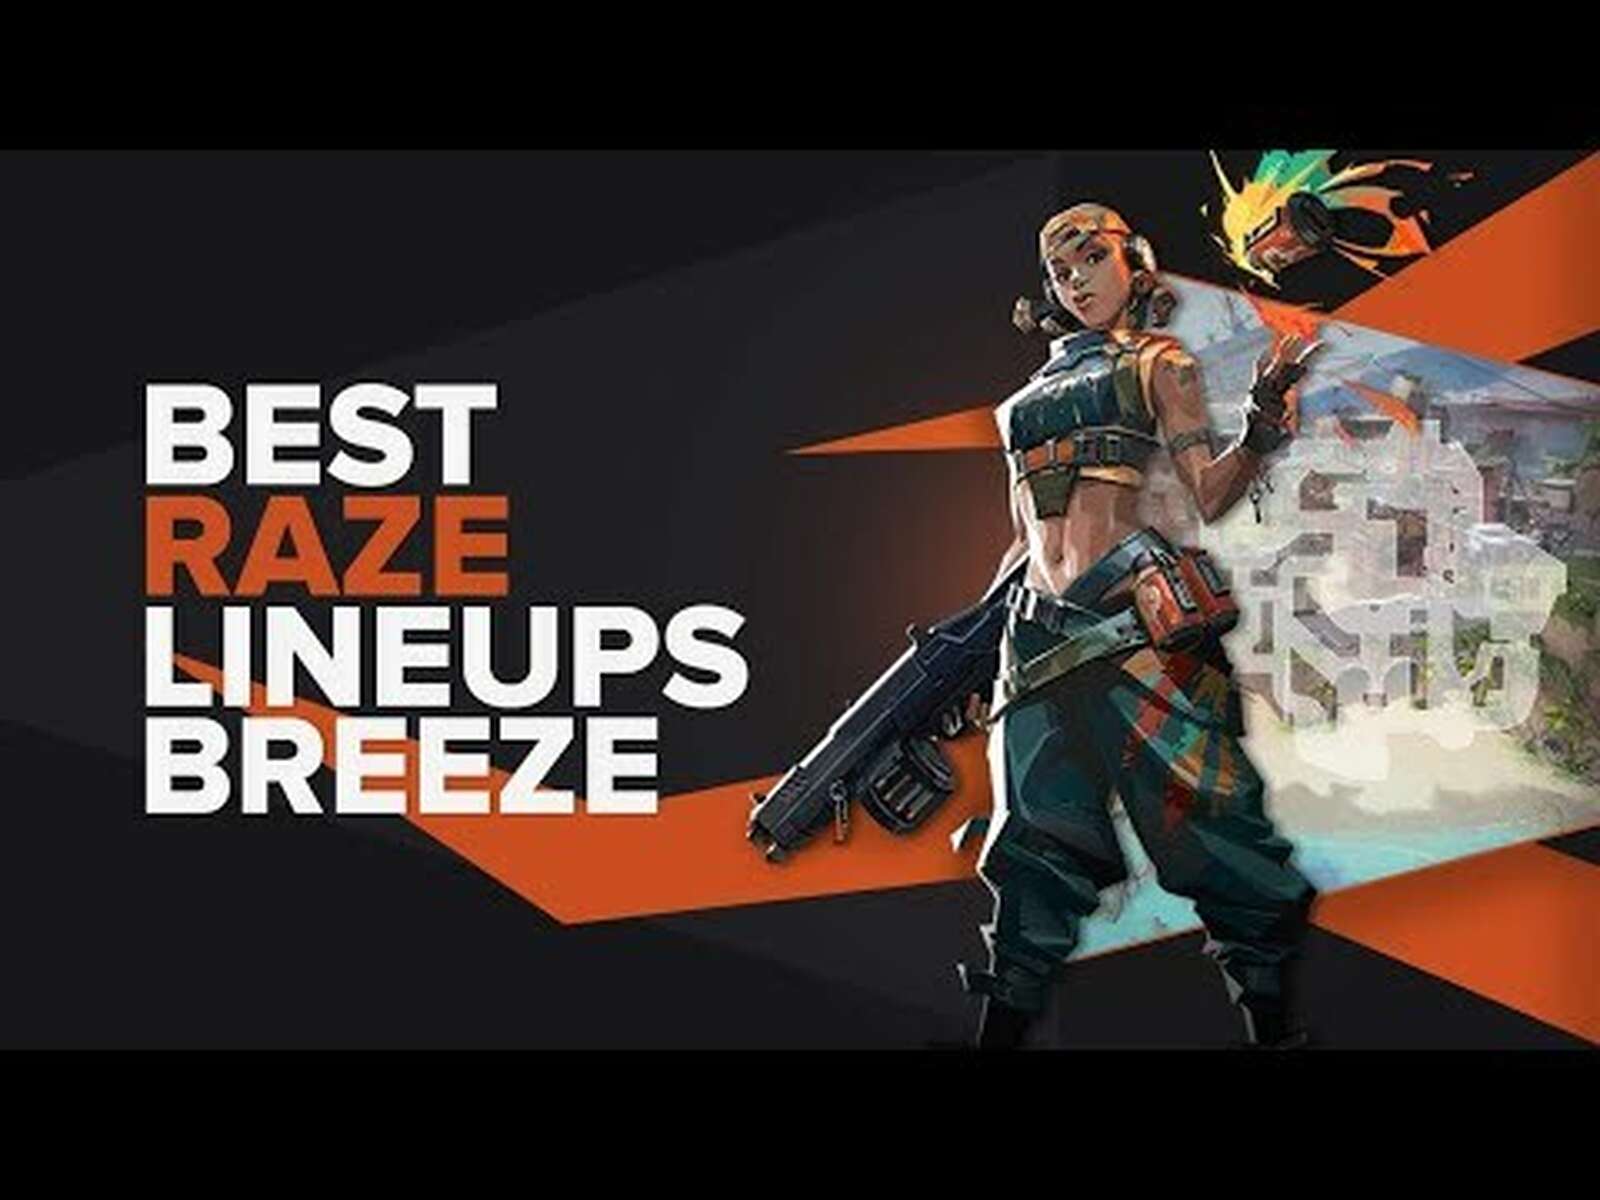 The Best Raze Lineups on Breeze